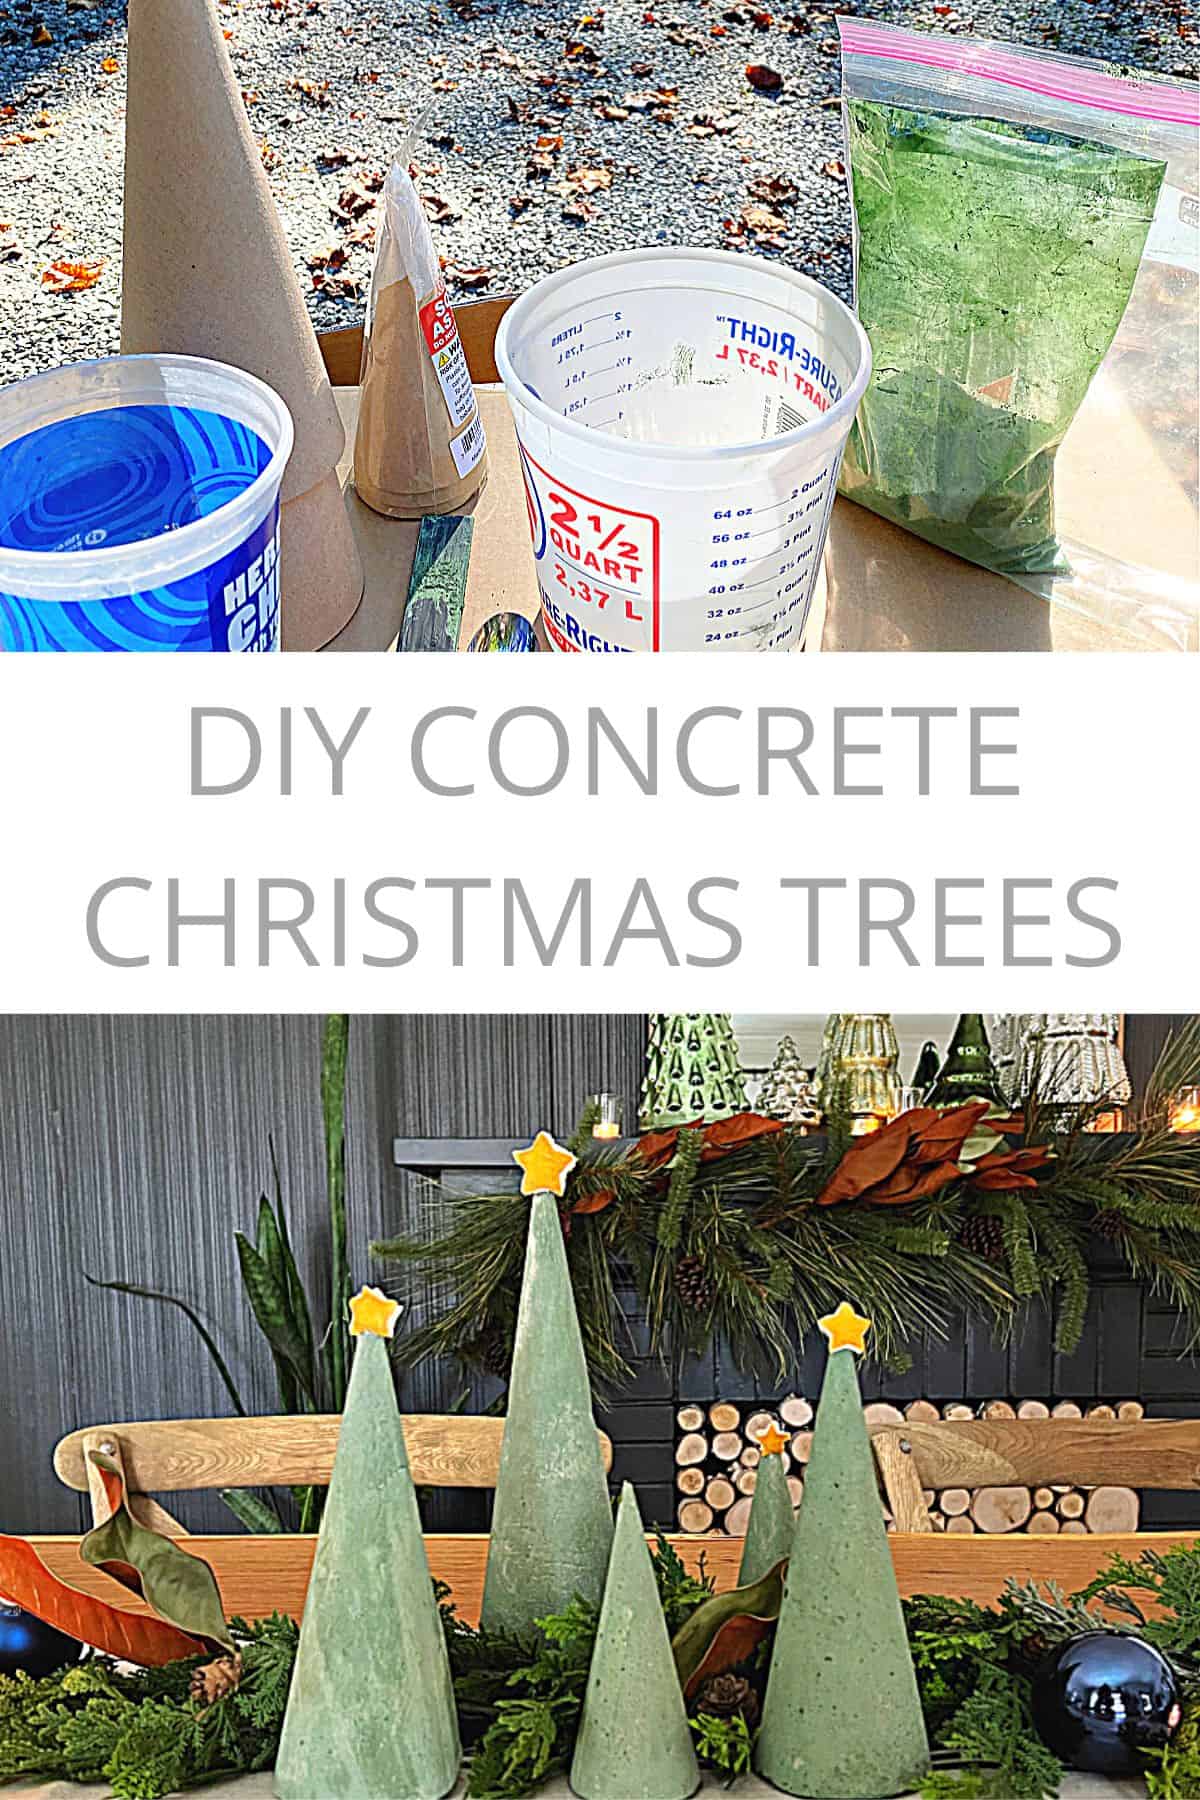 DIY concrete Christmas trees and supplies to make them